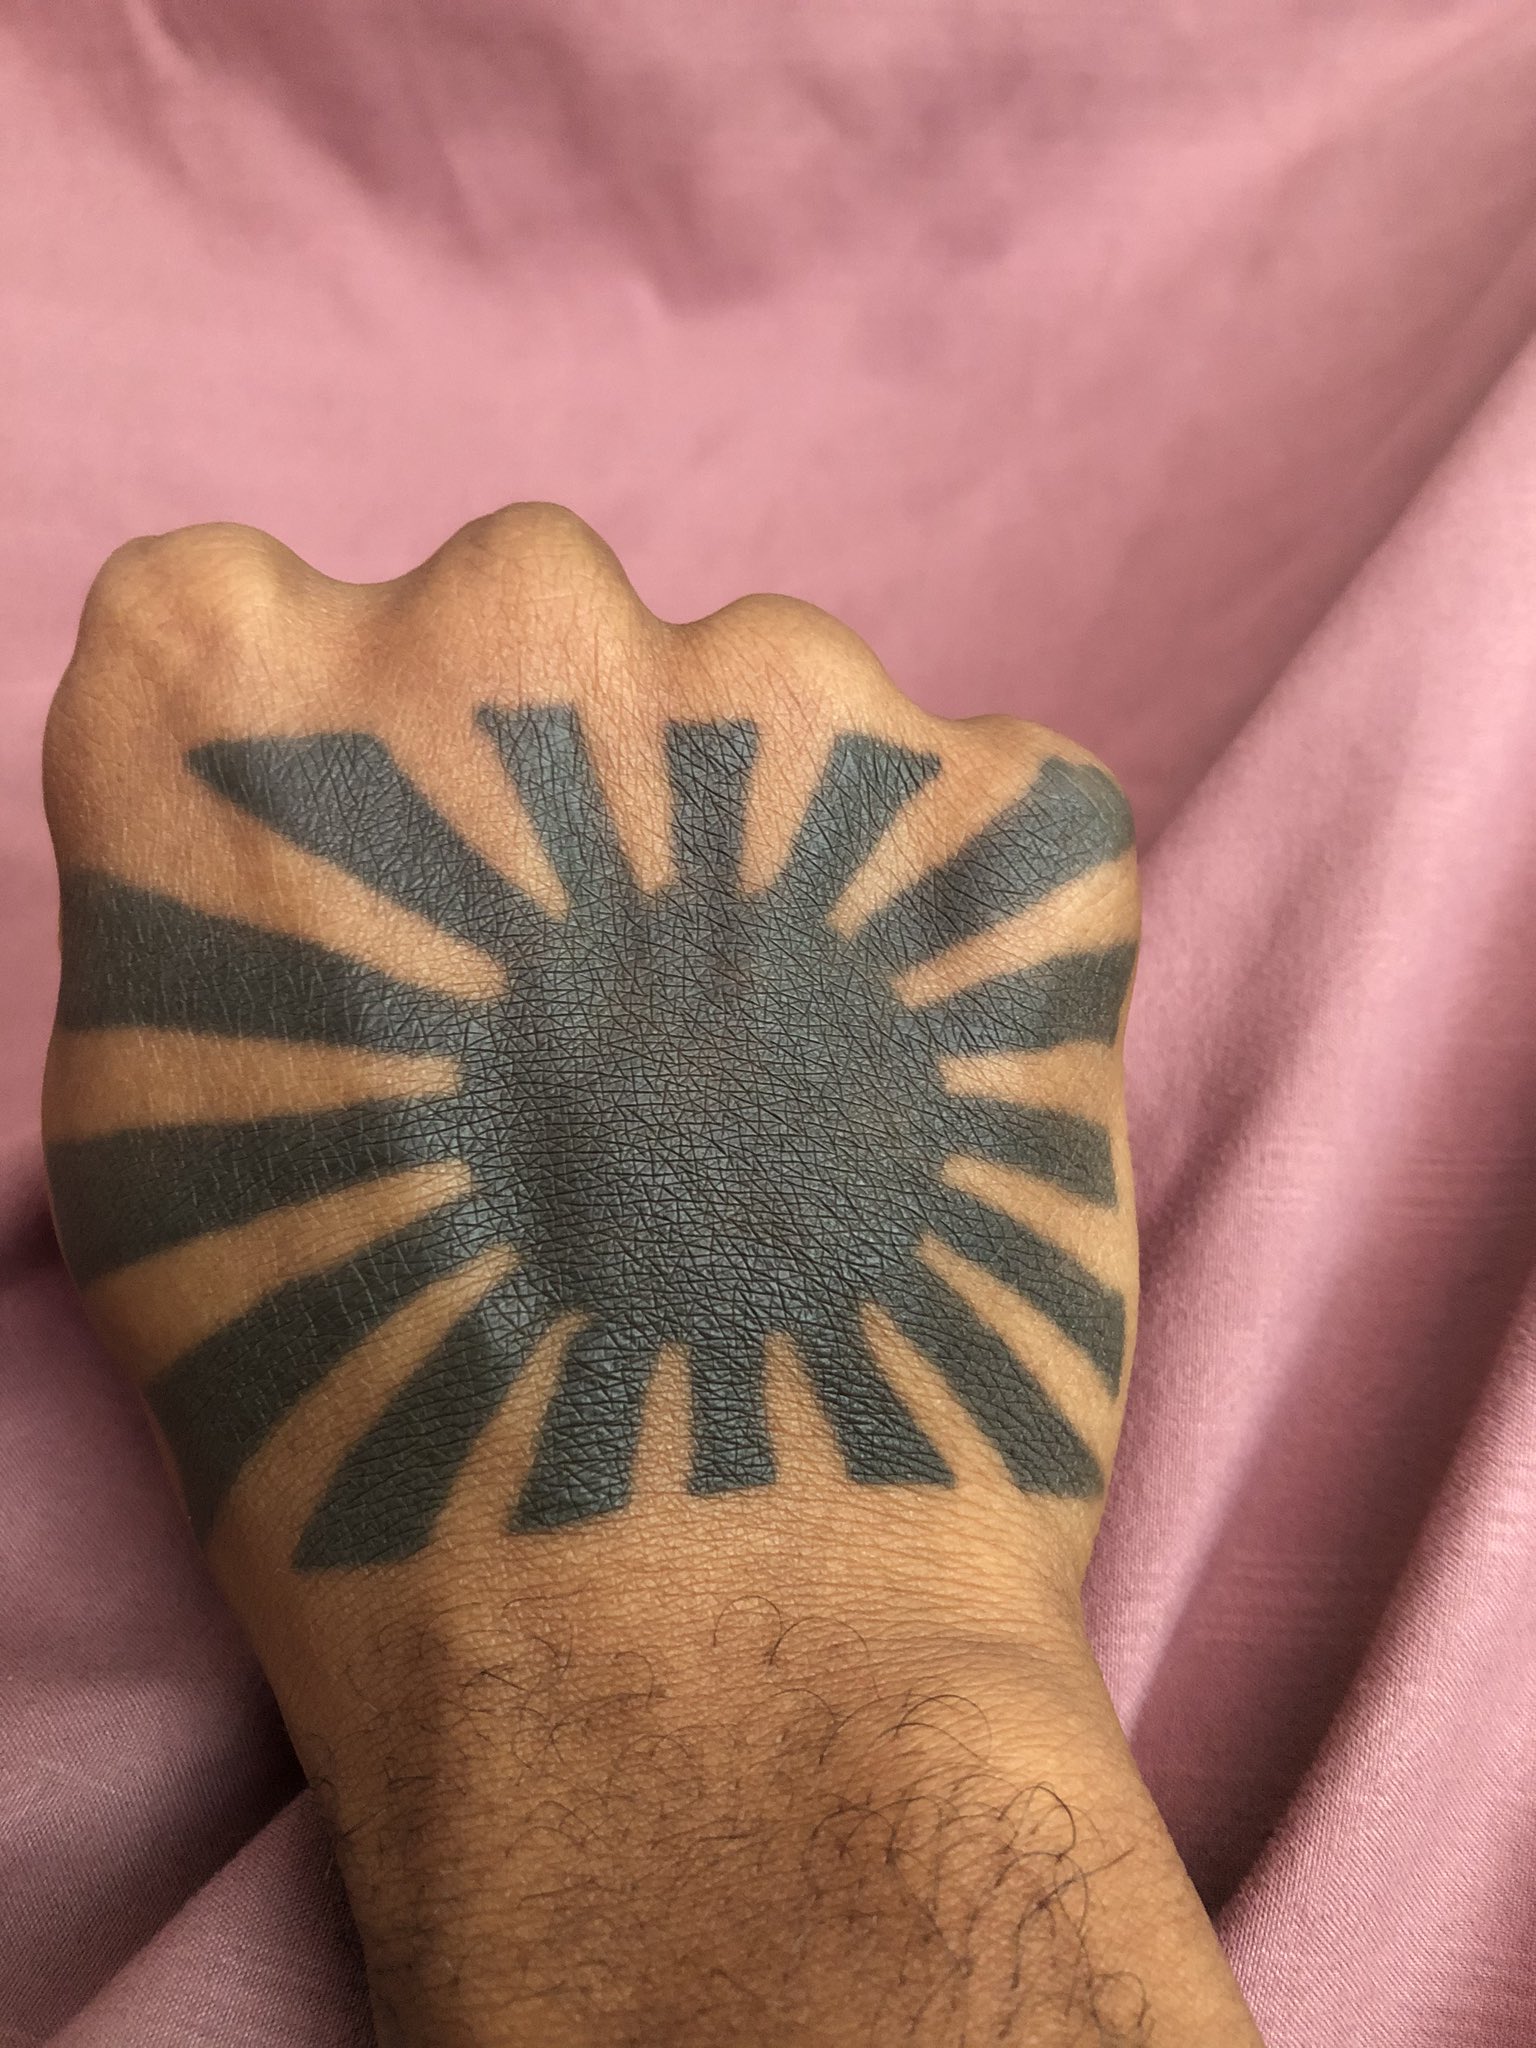 Discover 160+ rising sun tattoo